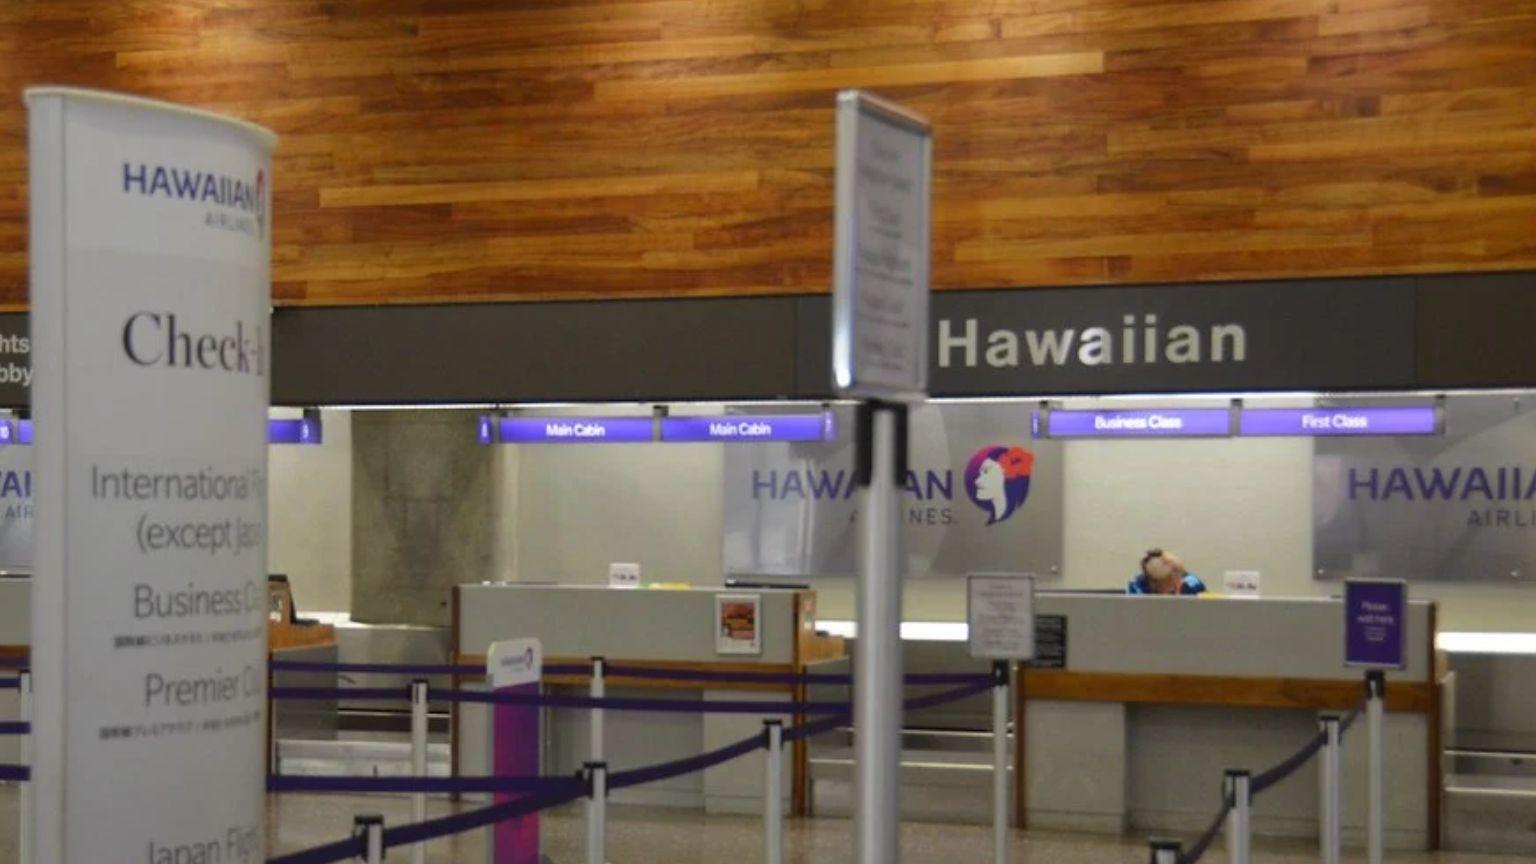 Hawaiian Airlines Plumeria Lounge, HNL